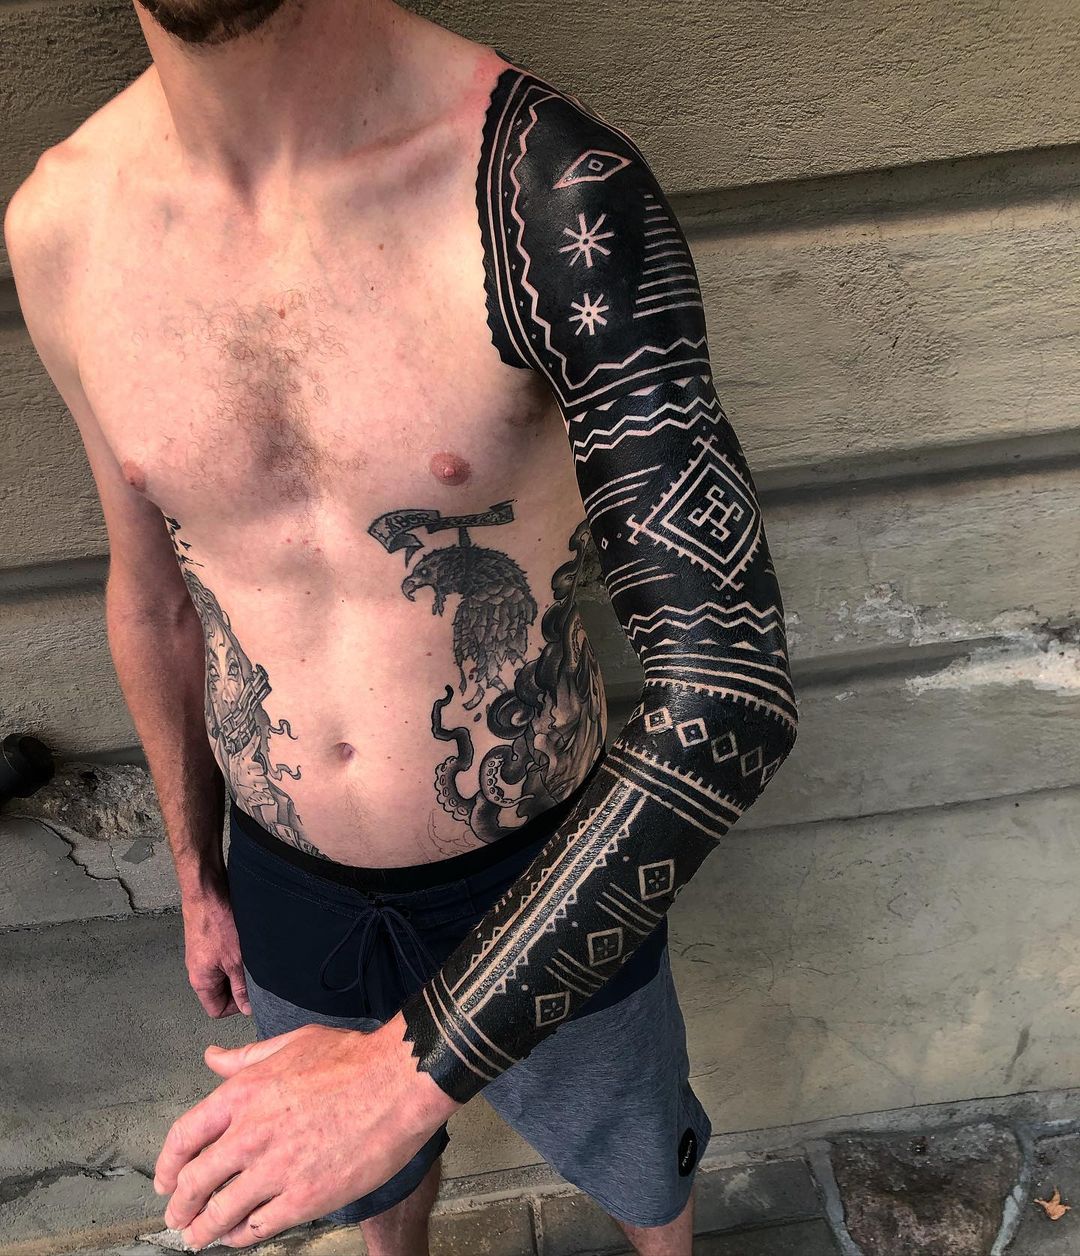 Temporary Sleeve Tattoos Extra Large Full ArmTattoos Sleeves and Half Arm  Fake Tattoos for Men Women Body Art 24Sheet  Amazonin Beauty